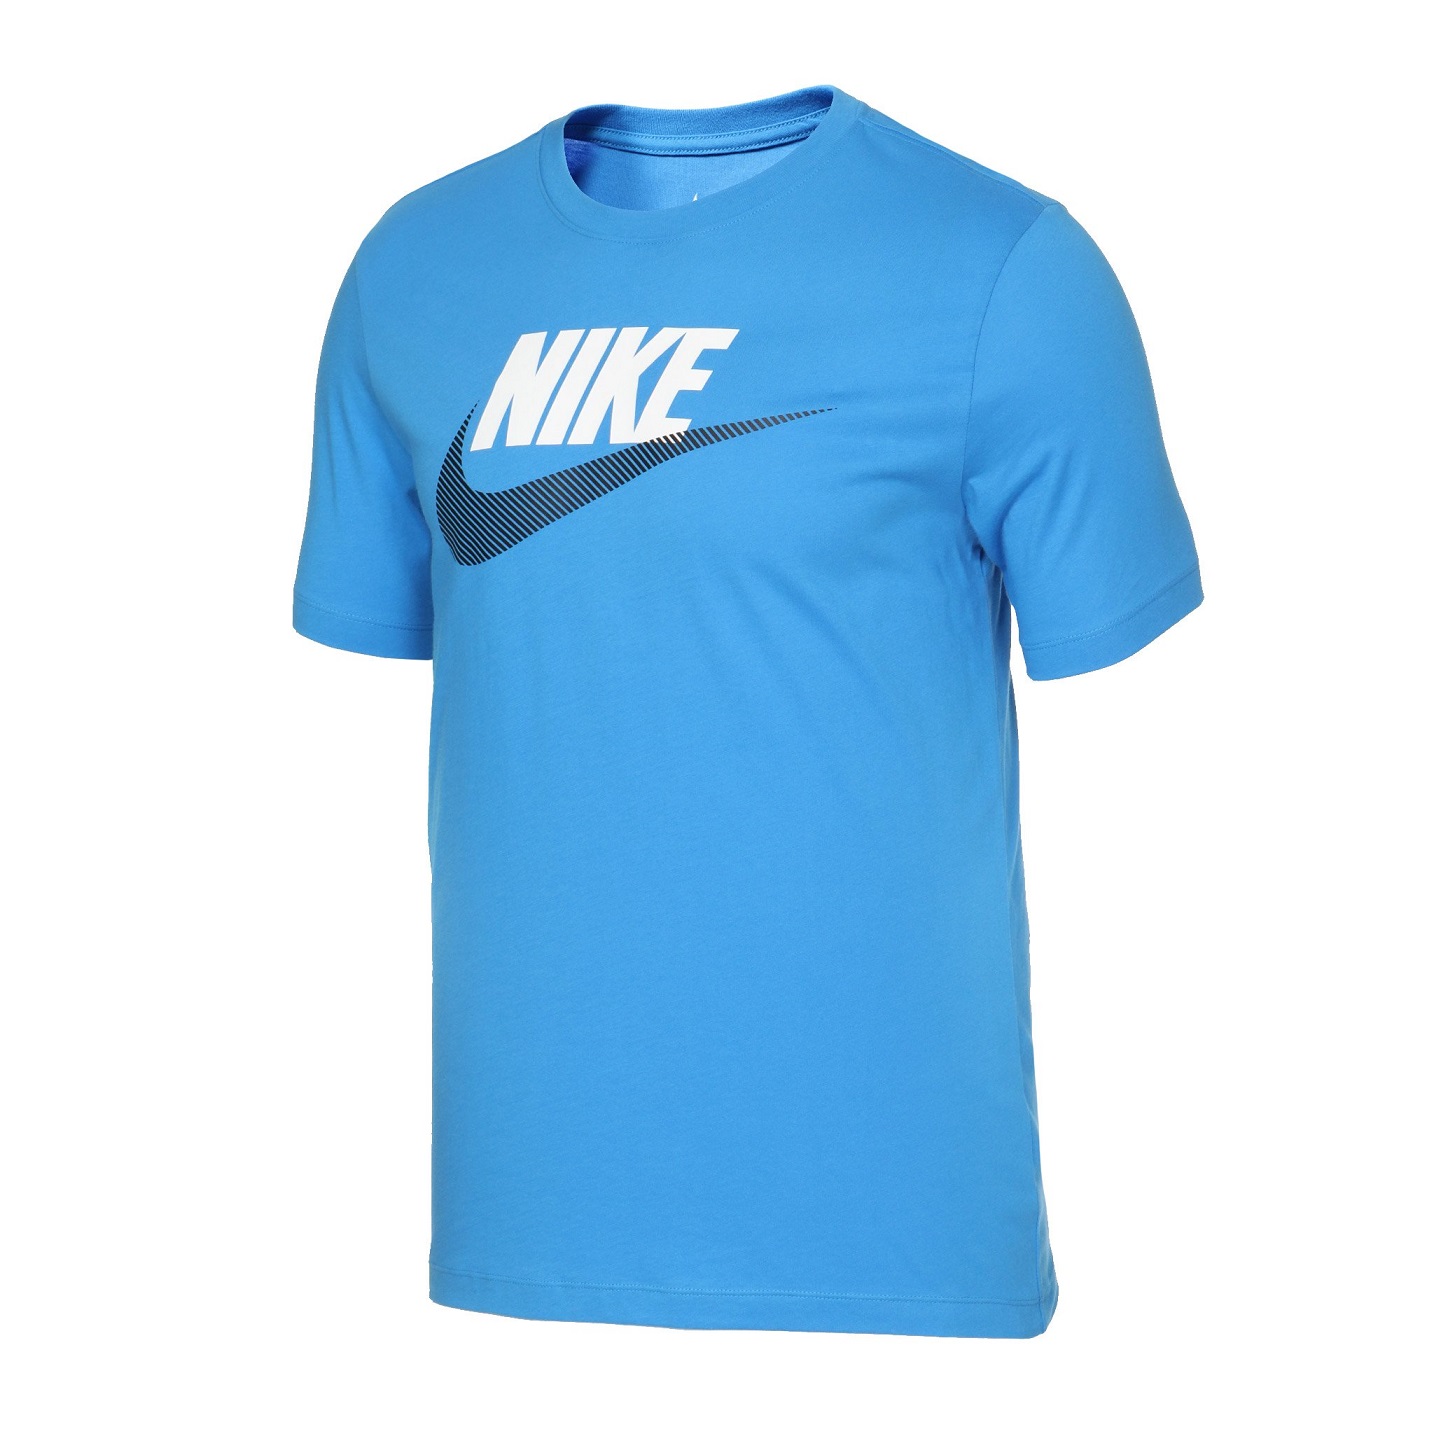 Playera Nike Sportswear Tee Azul (Hombre) DB6523-435